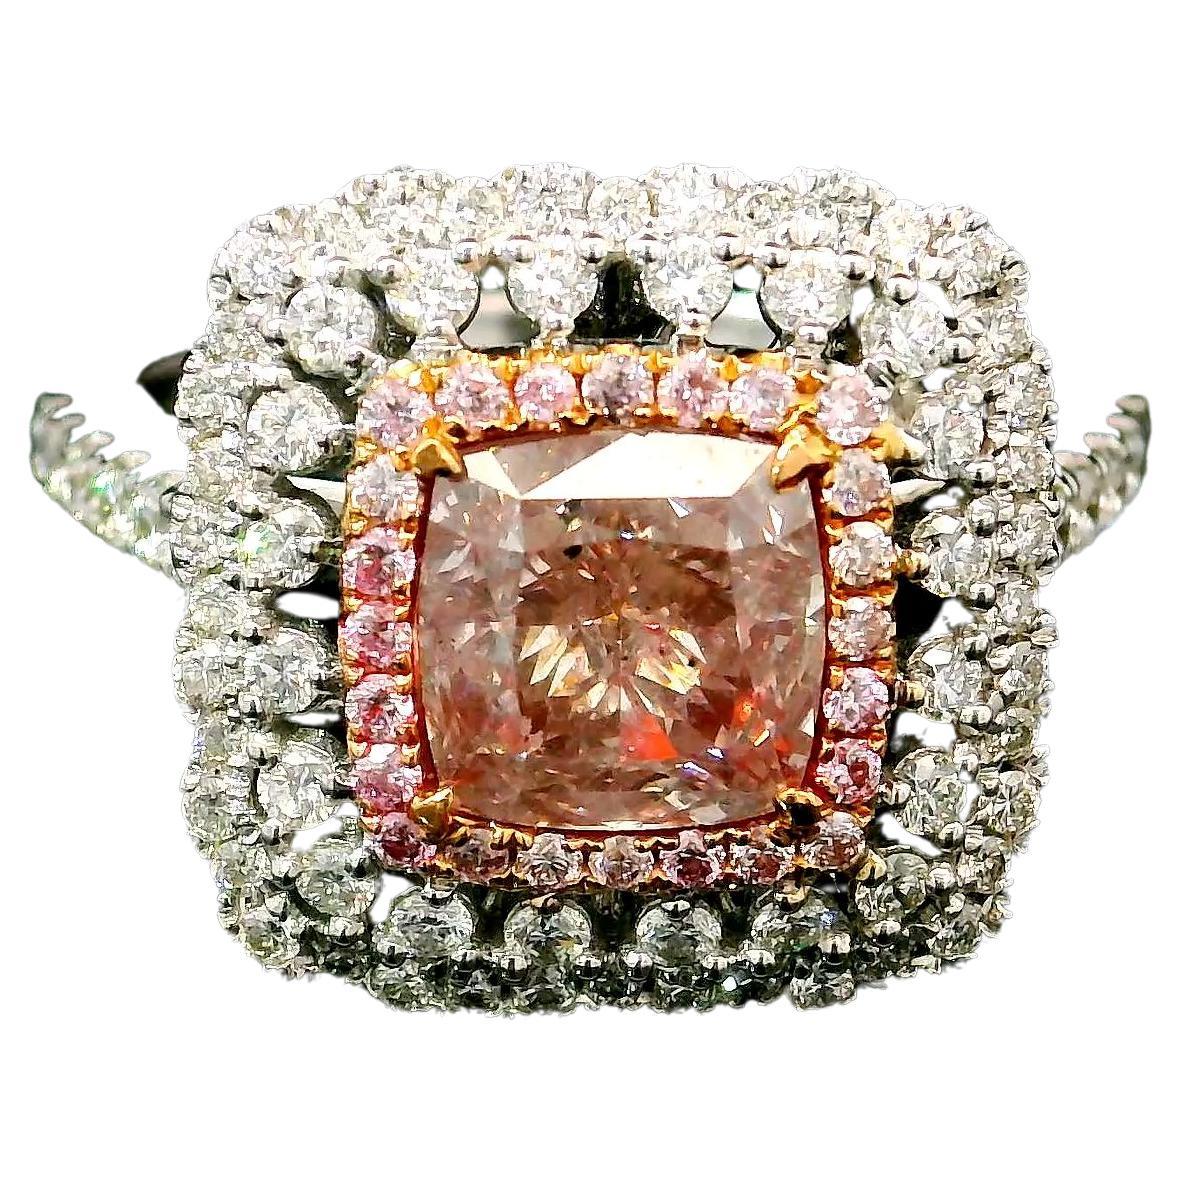 1.51 Carat Fancy Light Brownish Pink Diamond Ring I1 Clarity GIA Certified